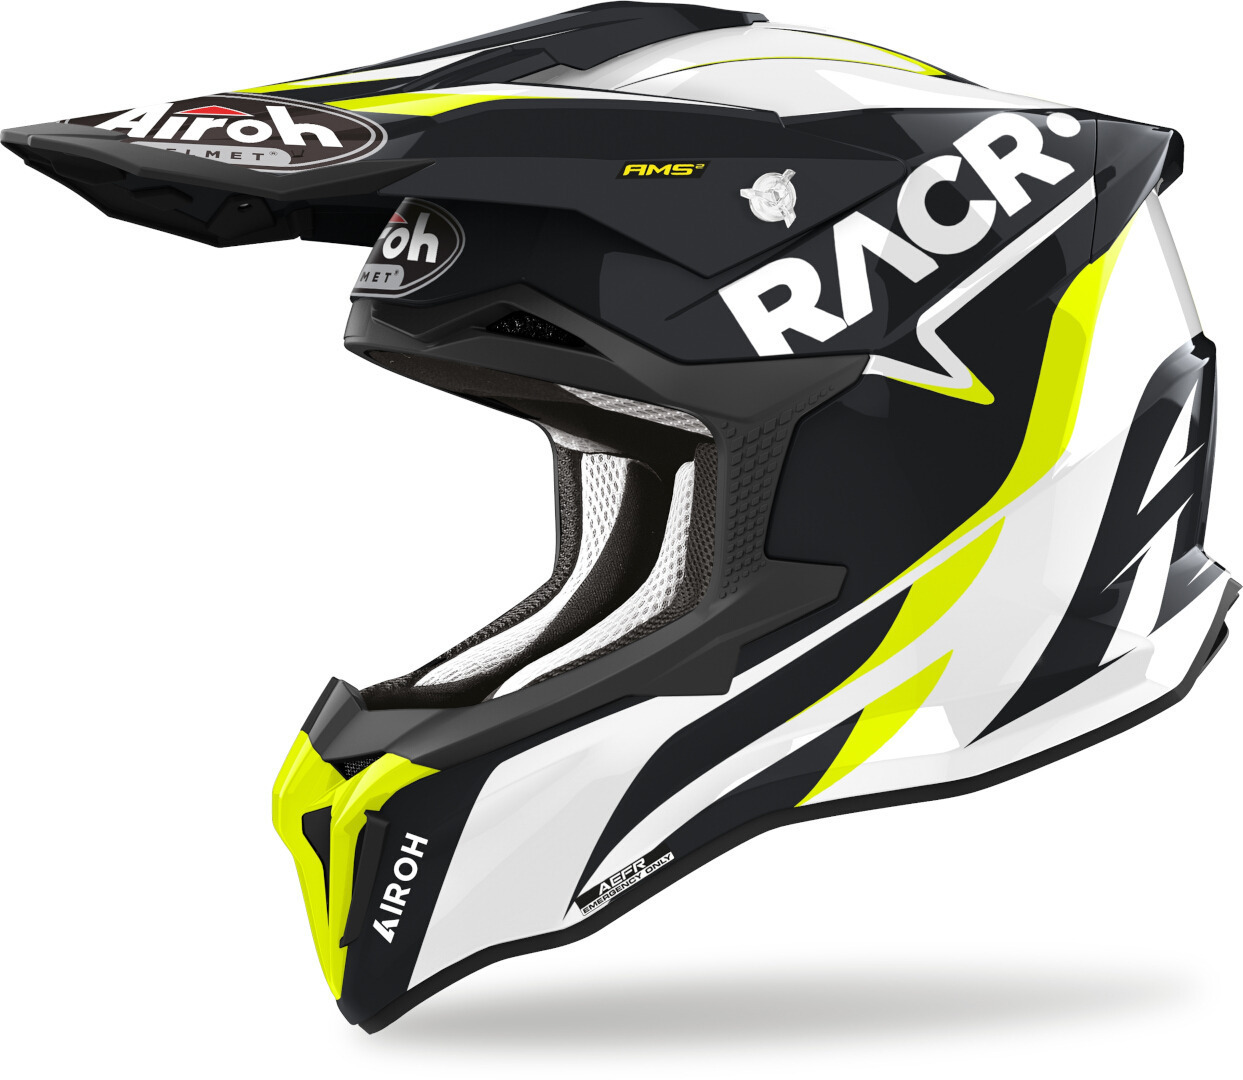 Airoh Strycker Racr Motocross Helm, schwarz-weiss-gelb, Größe S